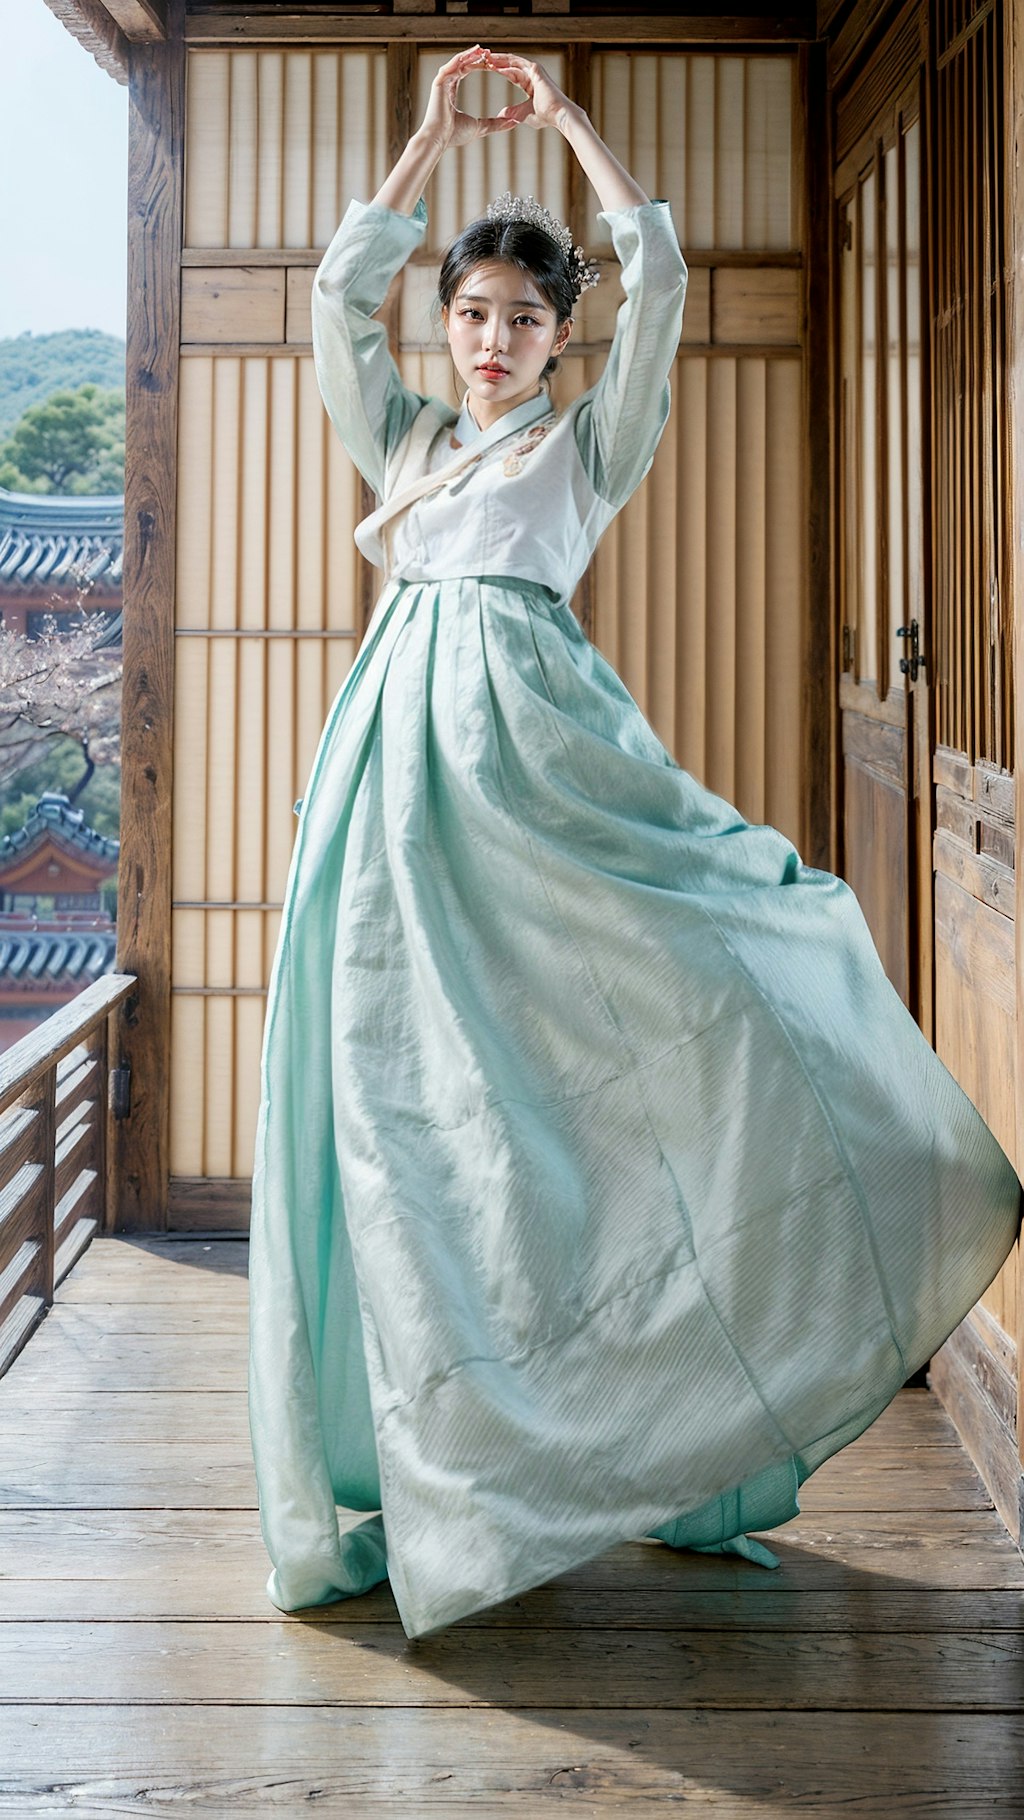 Woman wearing Hanbok (68pics)